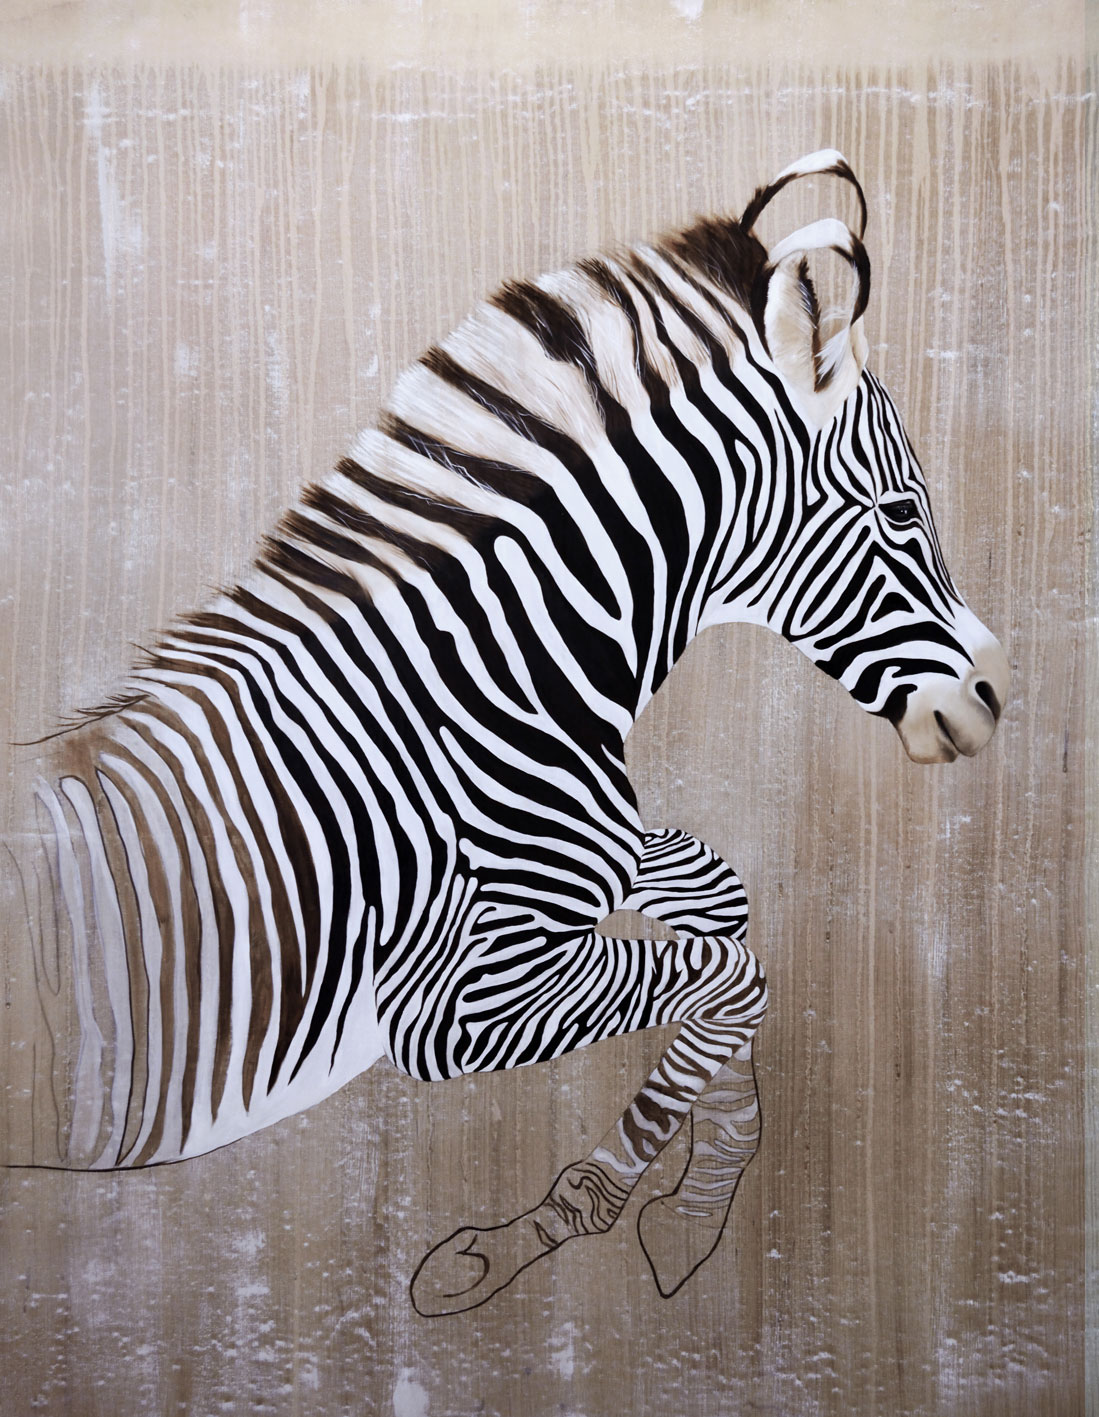 EQUUS GREVYI zebra-grevy`s-threatened-endangered-extinction- Thierry Bisch Contemporary painter animals painting art  nature biodiversity conservation 